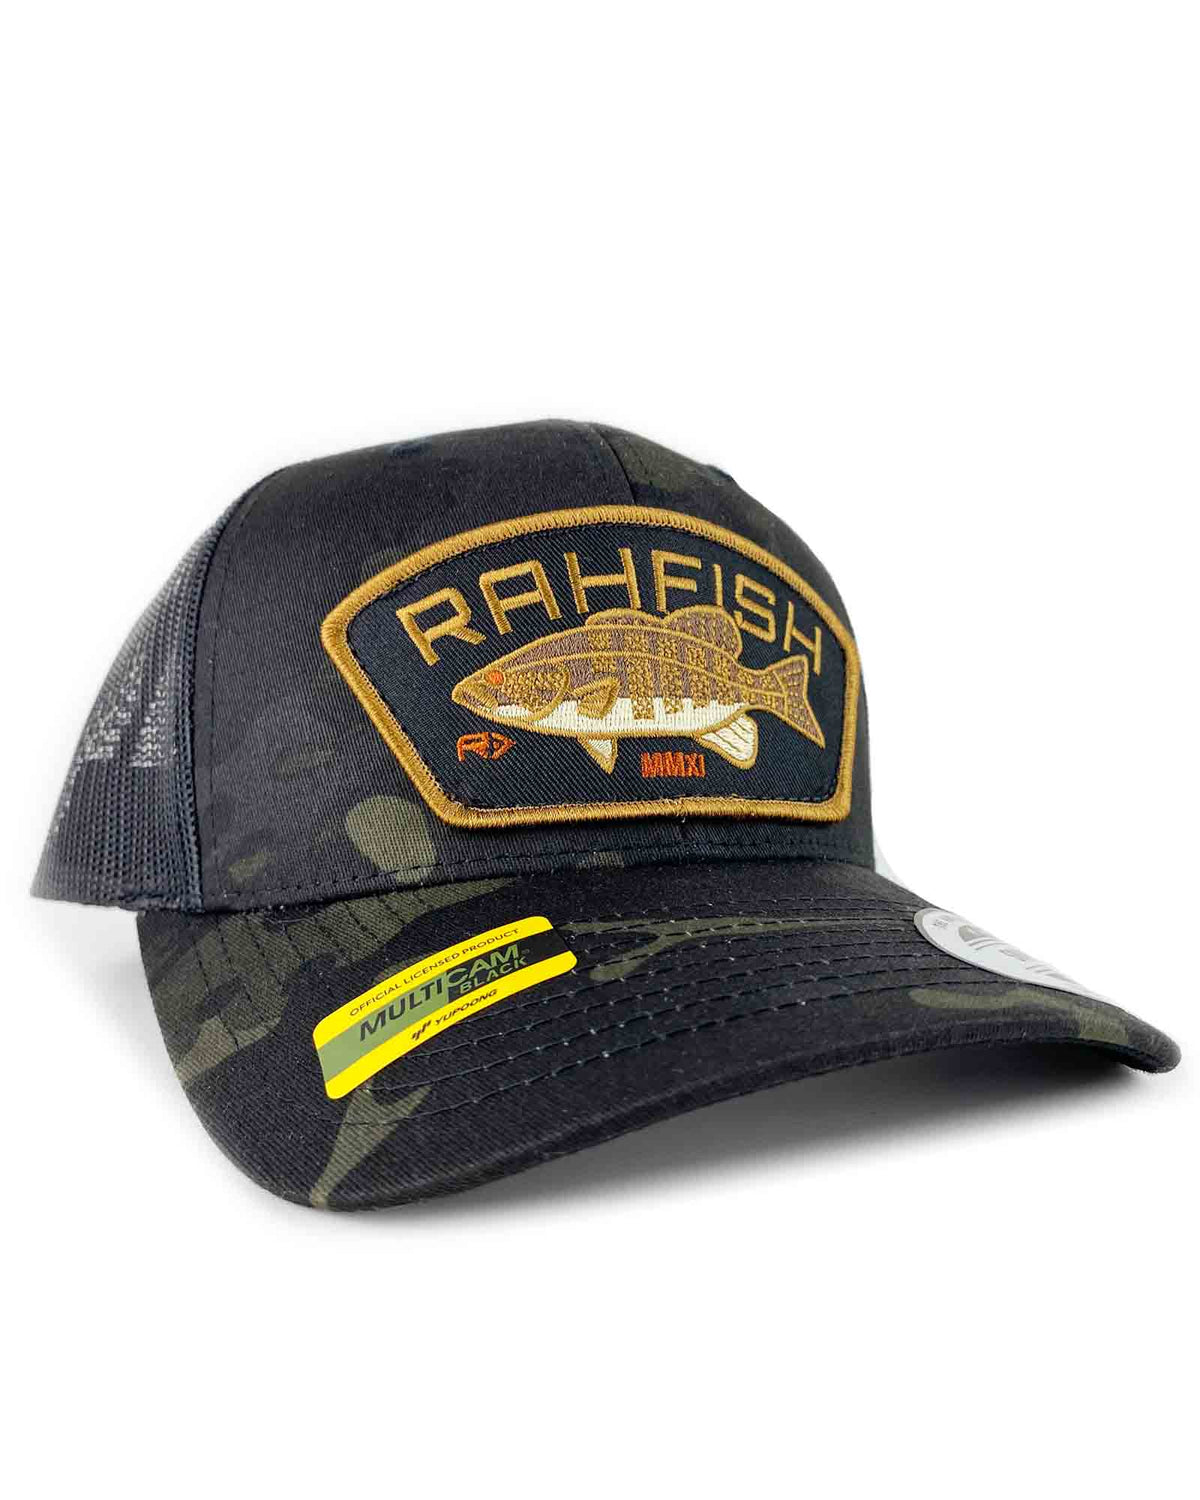 Rahfish SMB Black Camo Trucker Hat